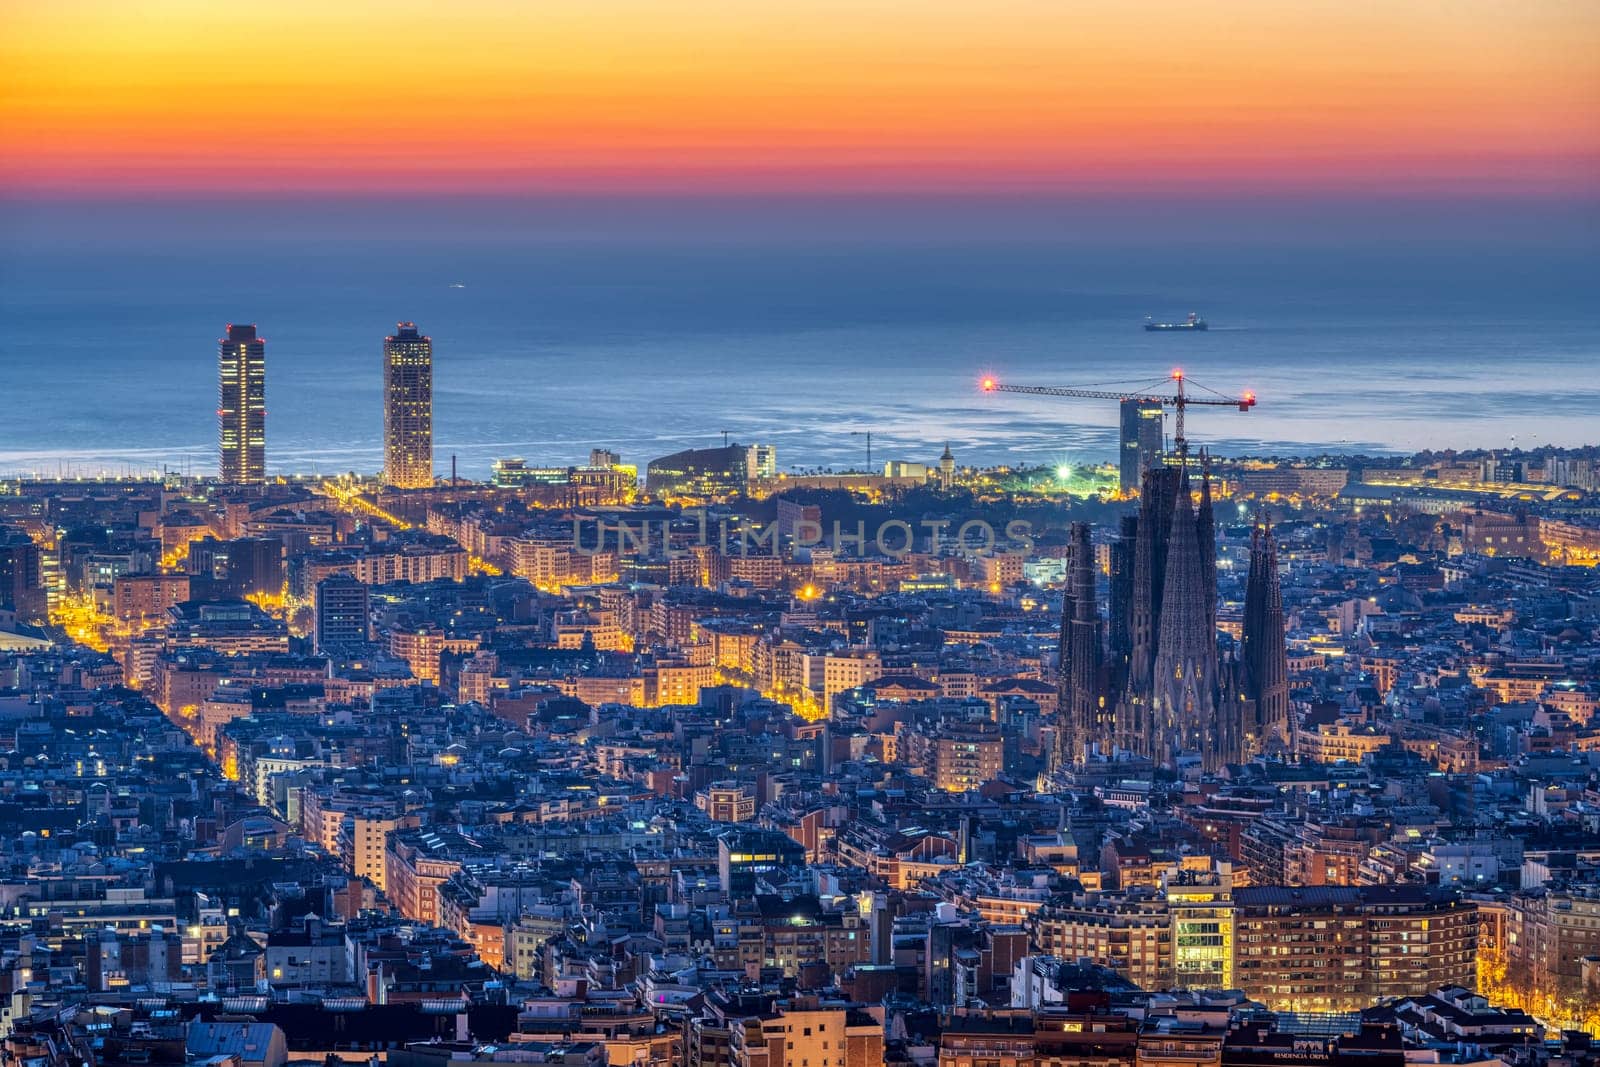 The skyline of Barcelona with the famous Sagrada Familia before sunrise